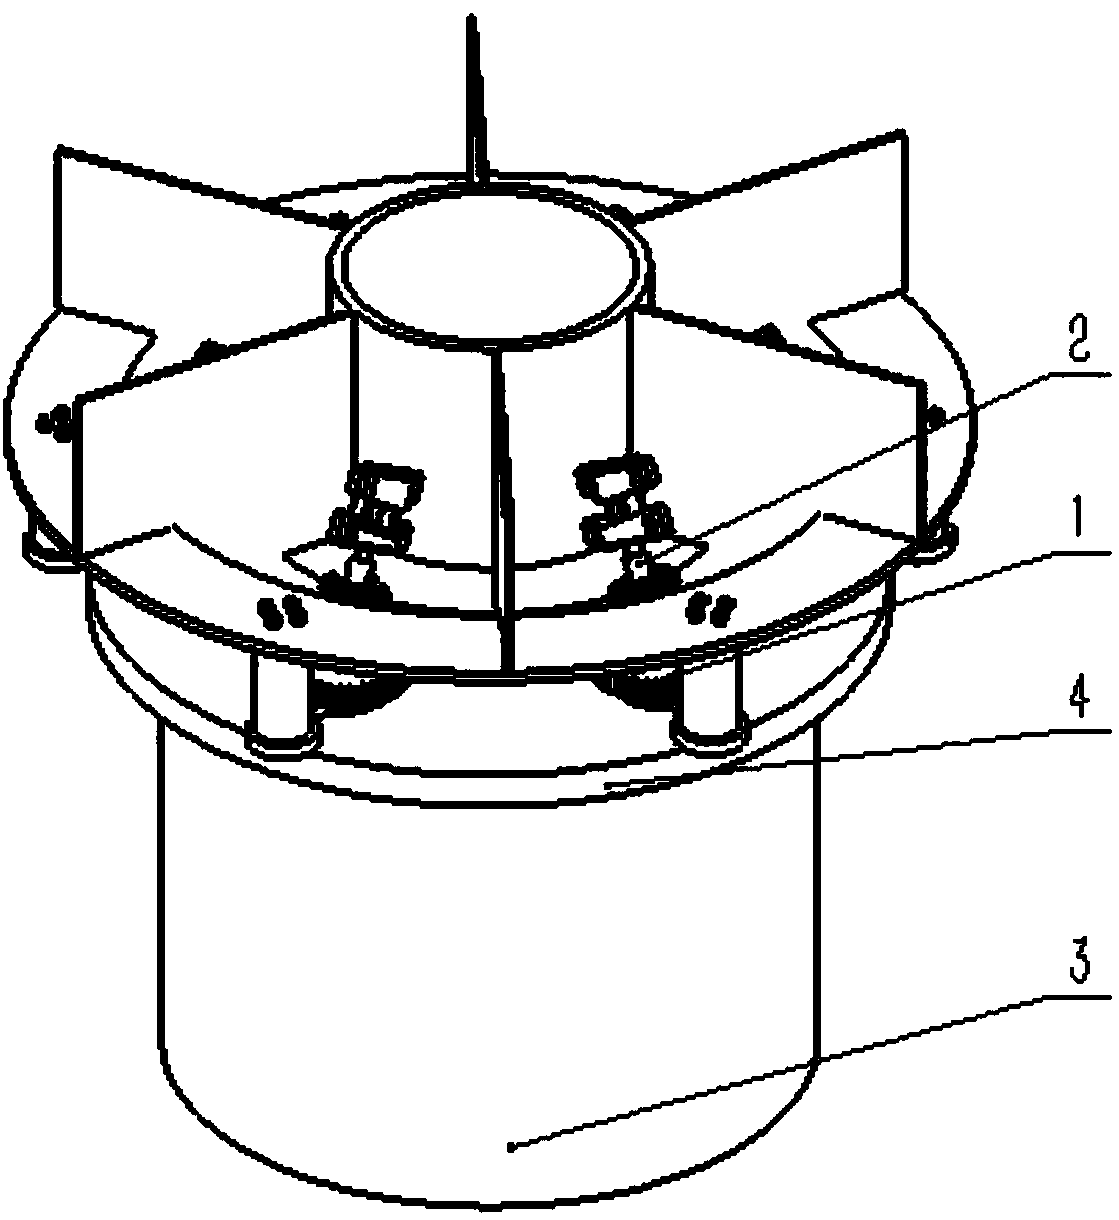 Multi-station rotating tooling device for plasma physical vapor deposition